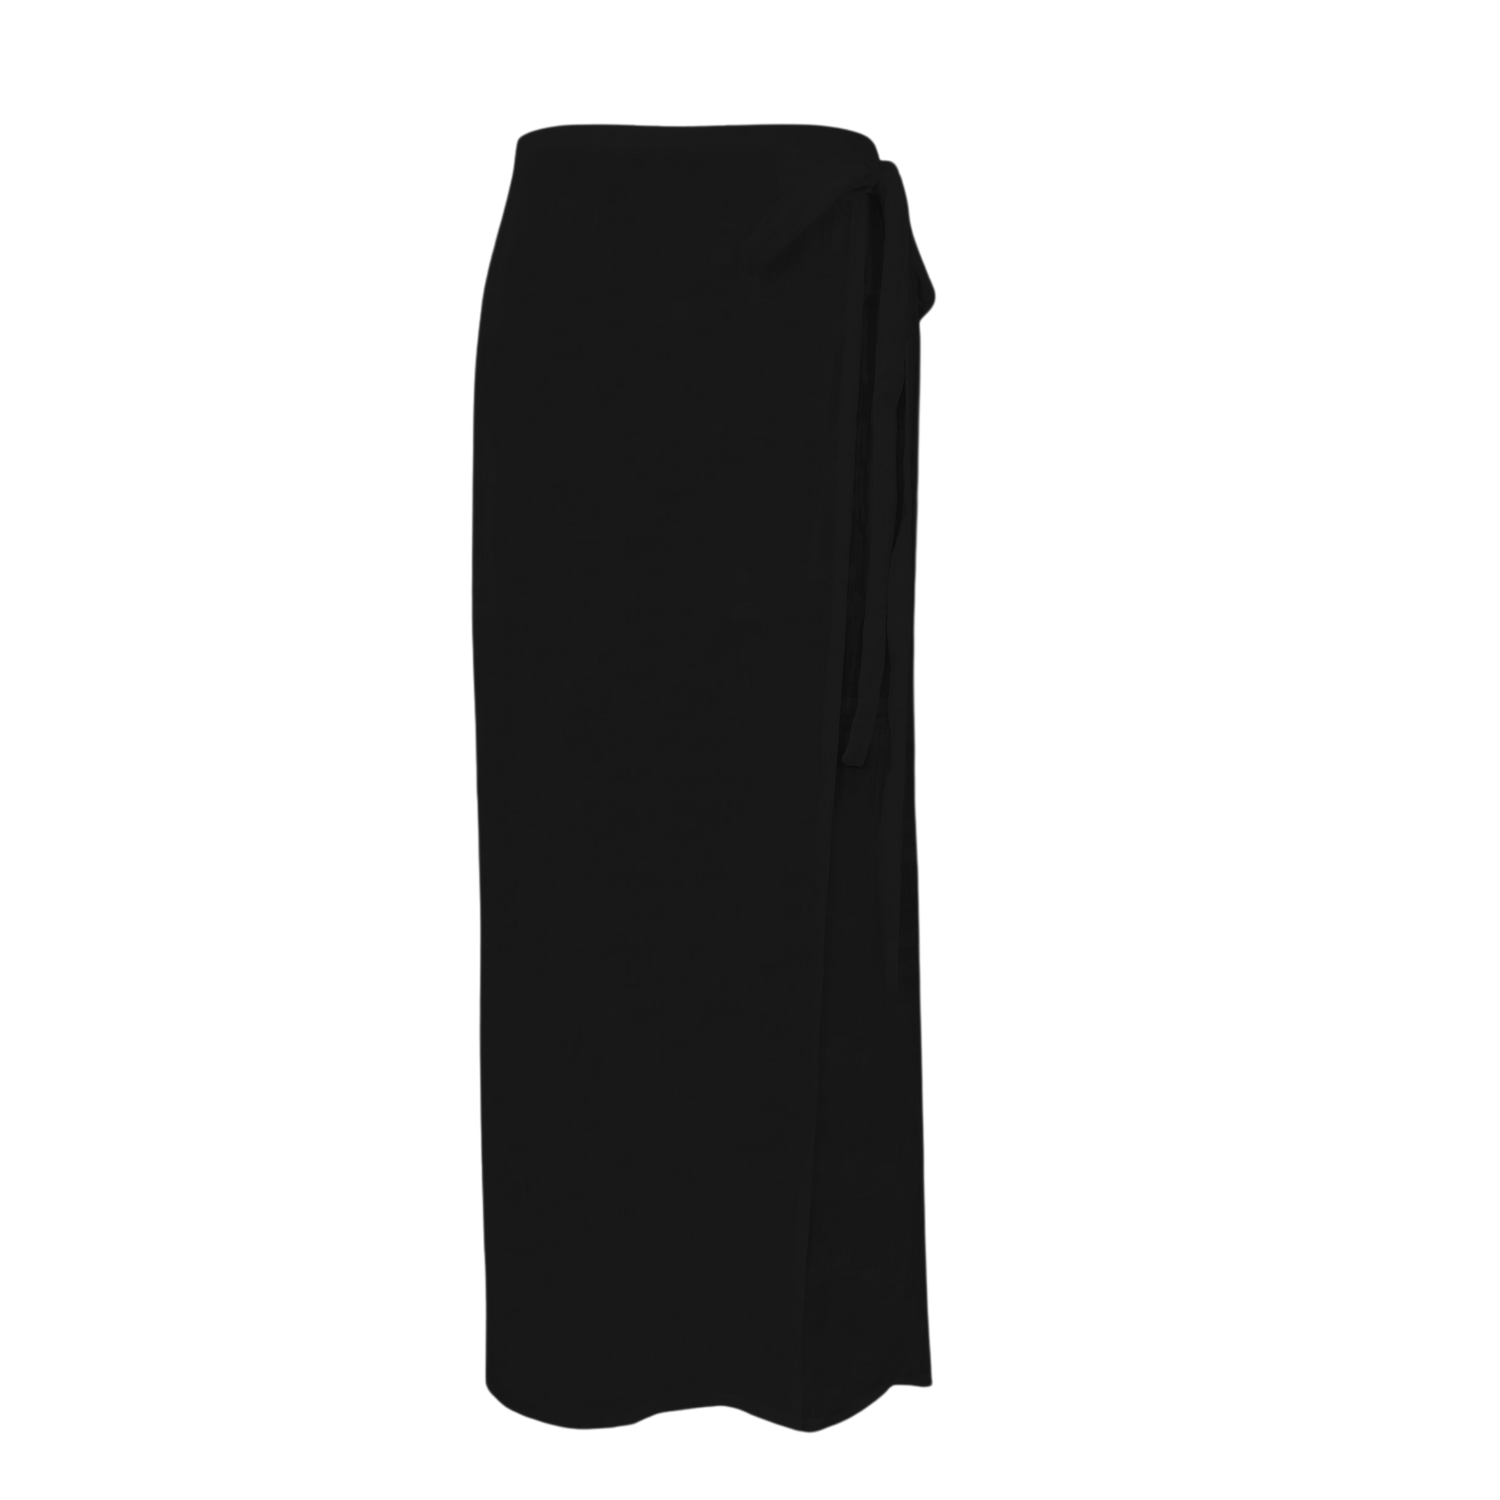 Sarong Wrap Skirt in Black